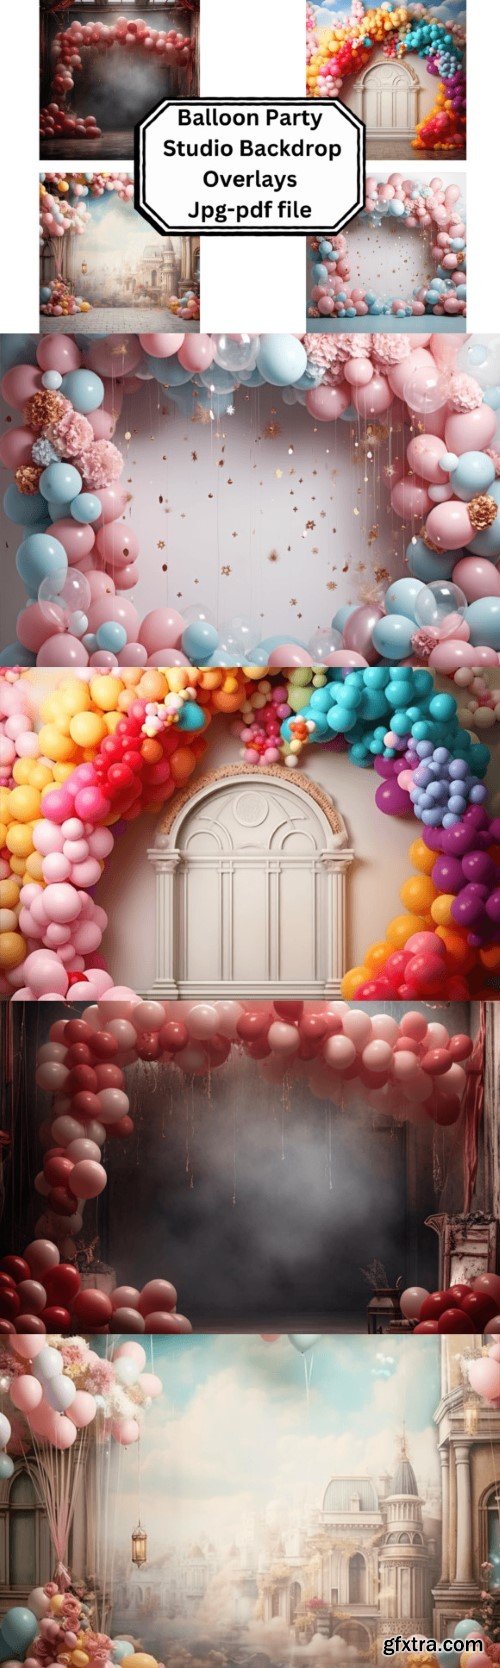 Balloon Party Studio Backdrop Overlays